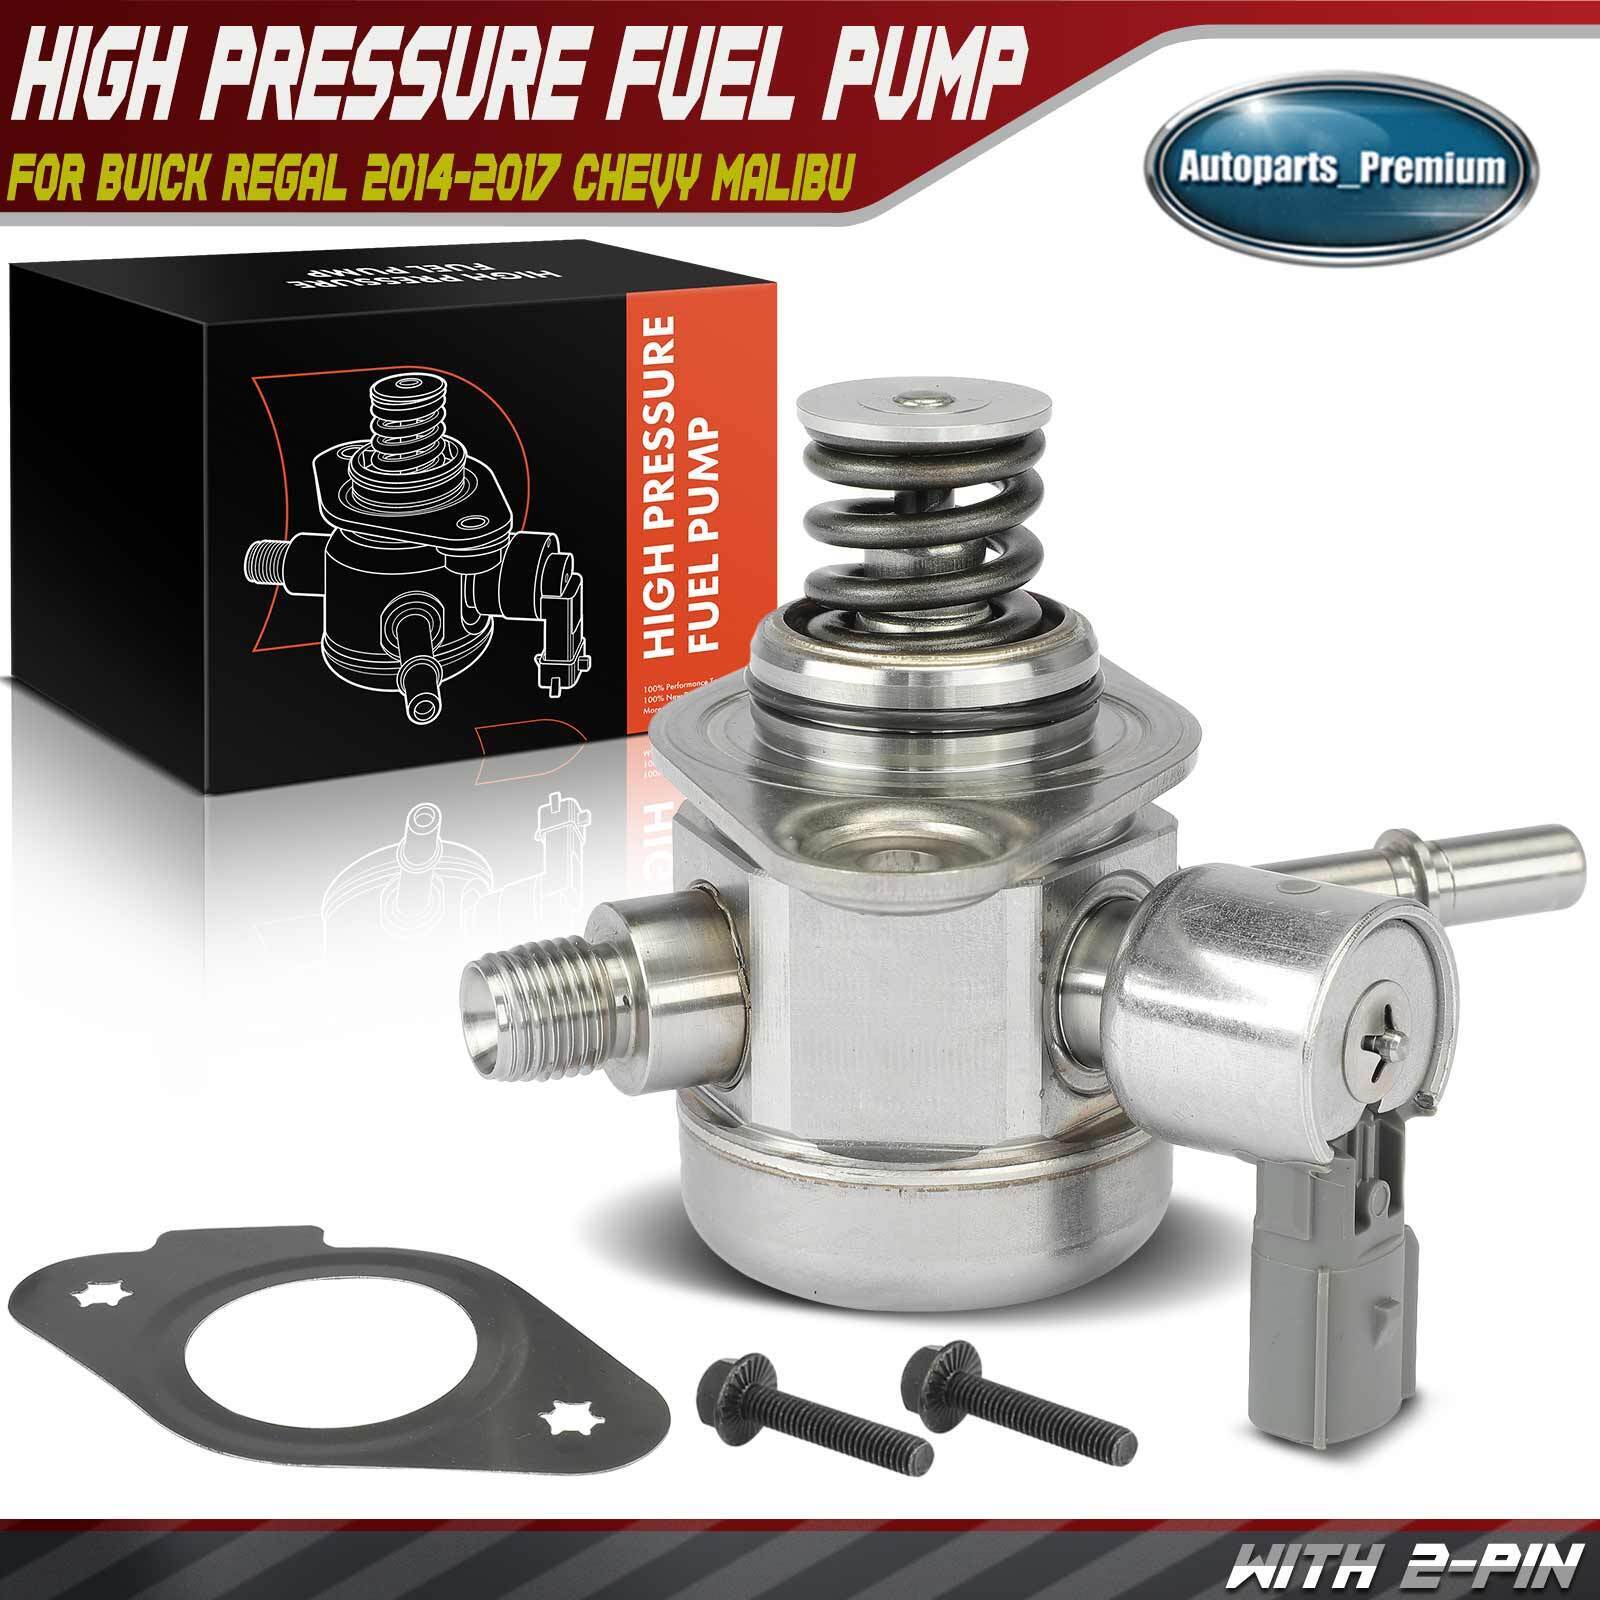 High Pressure Fuel Pump for Chevrolet Malibu 2013-2015 Impala 14-19 Buick Regal